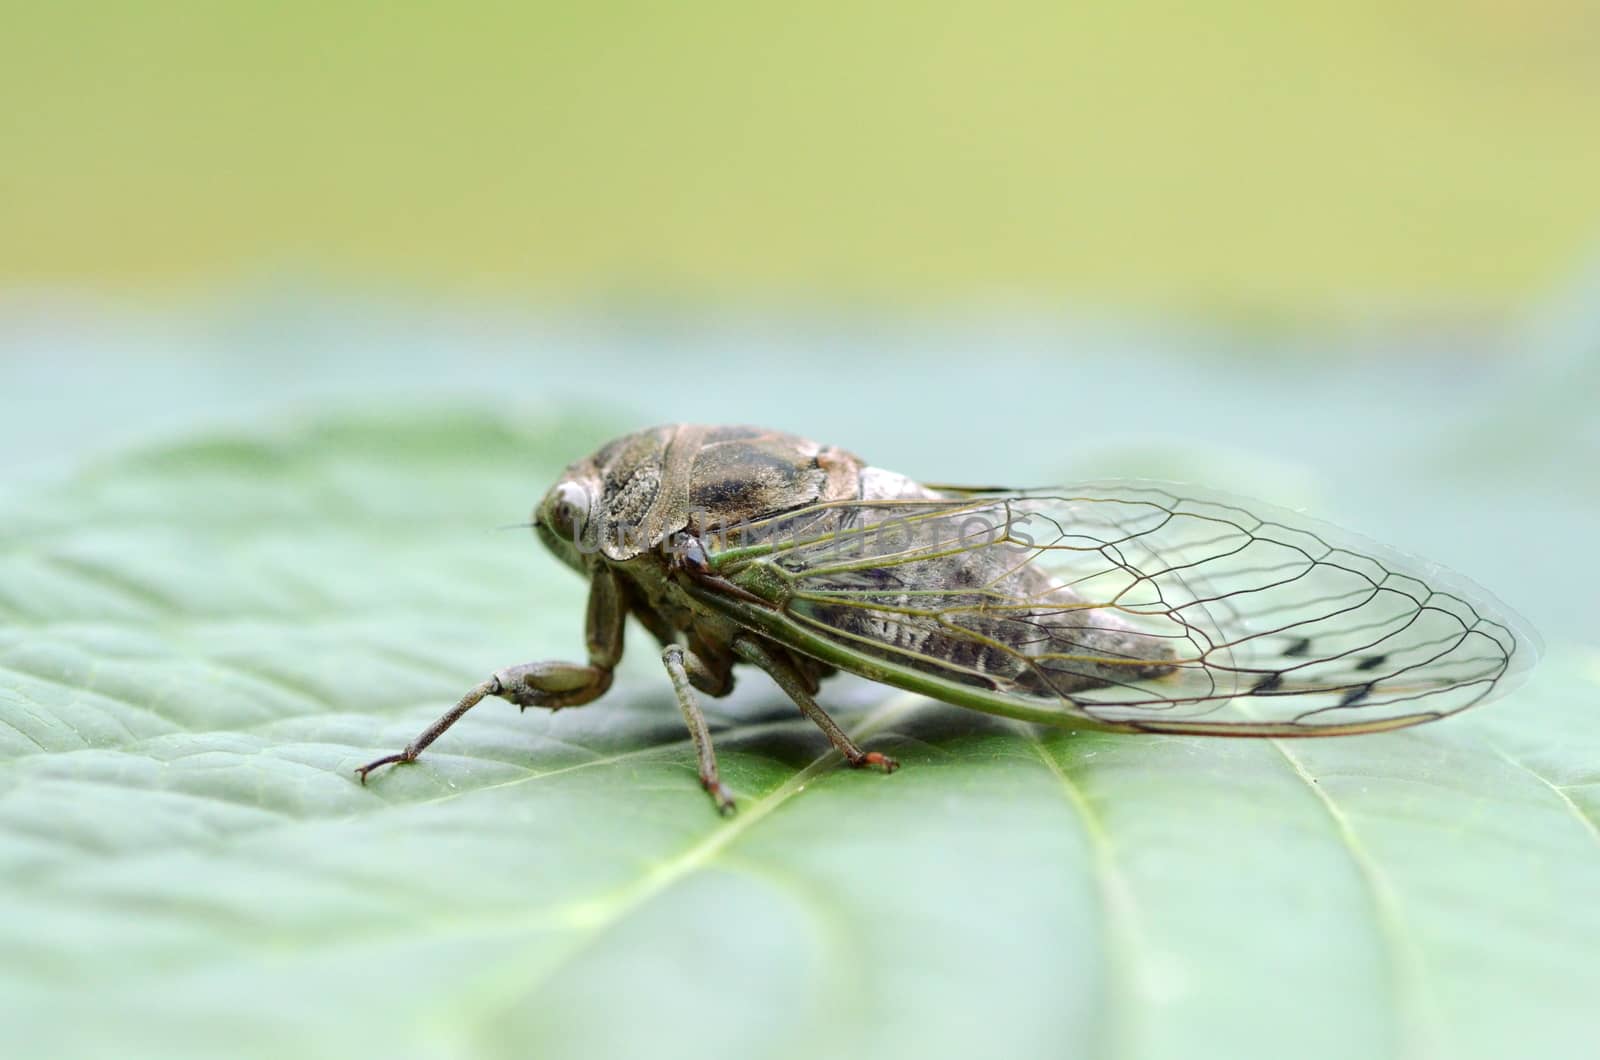 Dog-day cicada (Neotibicen canicularis) on a green leaf macro image